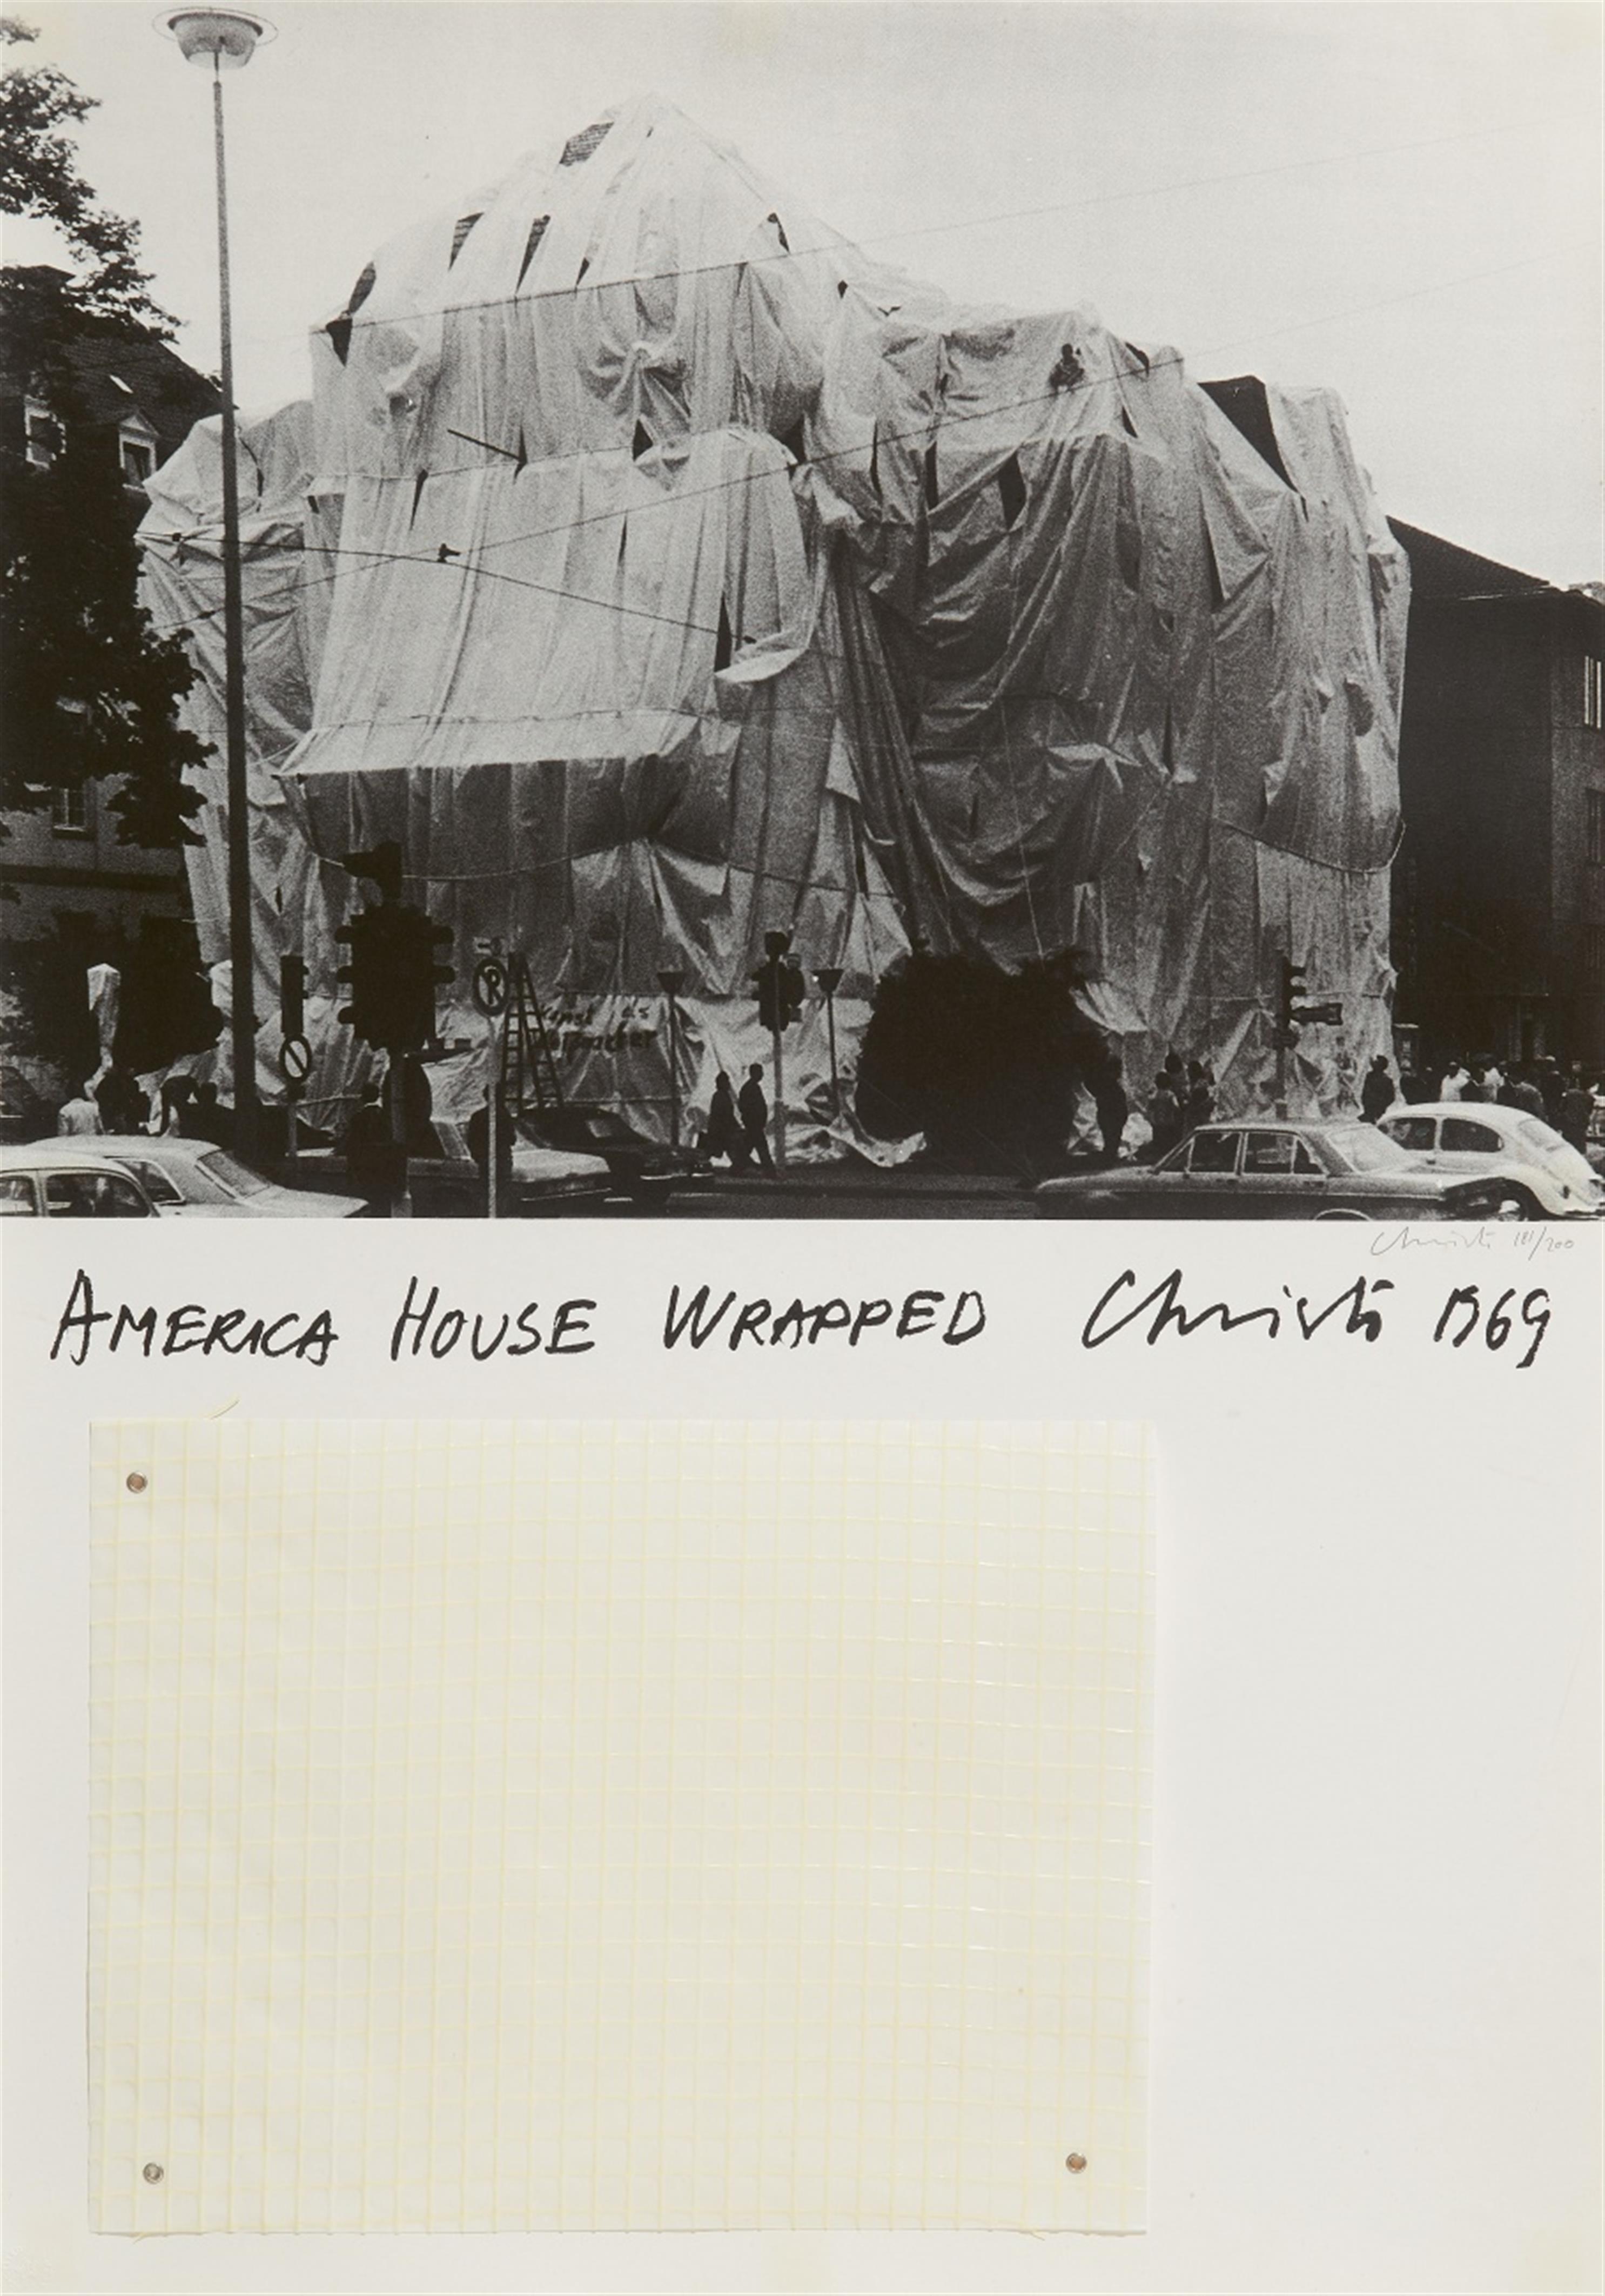 Christo - America House Wrapped, Heidelberg - image-1